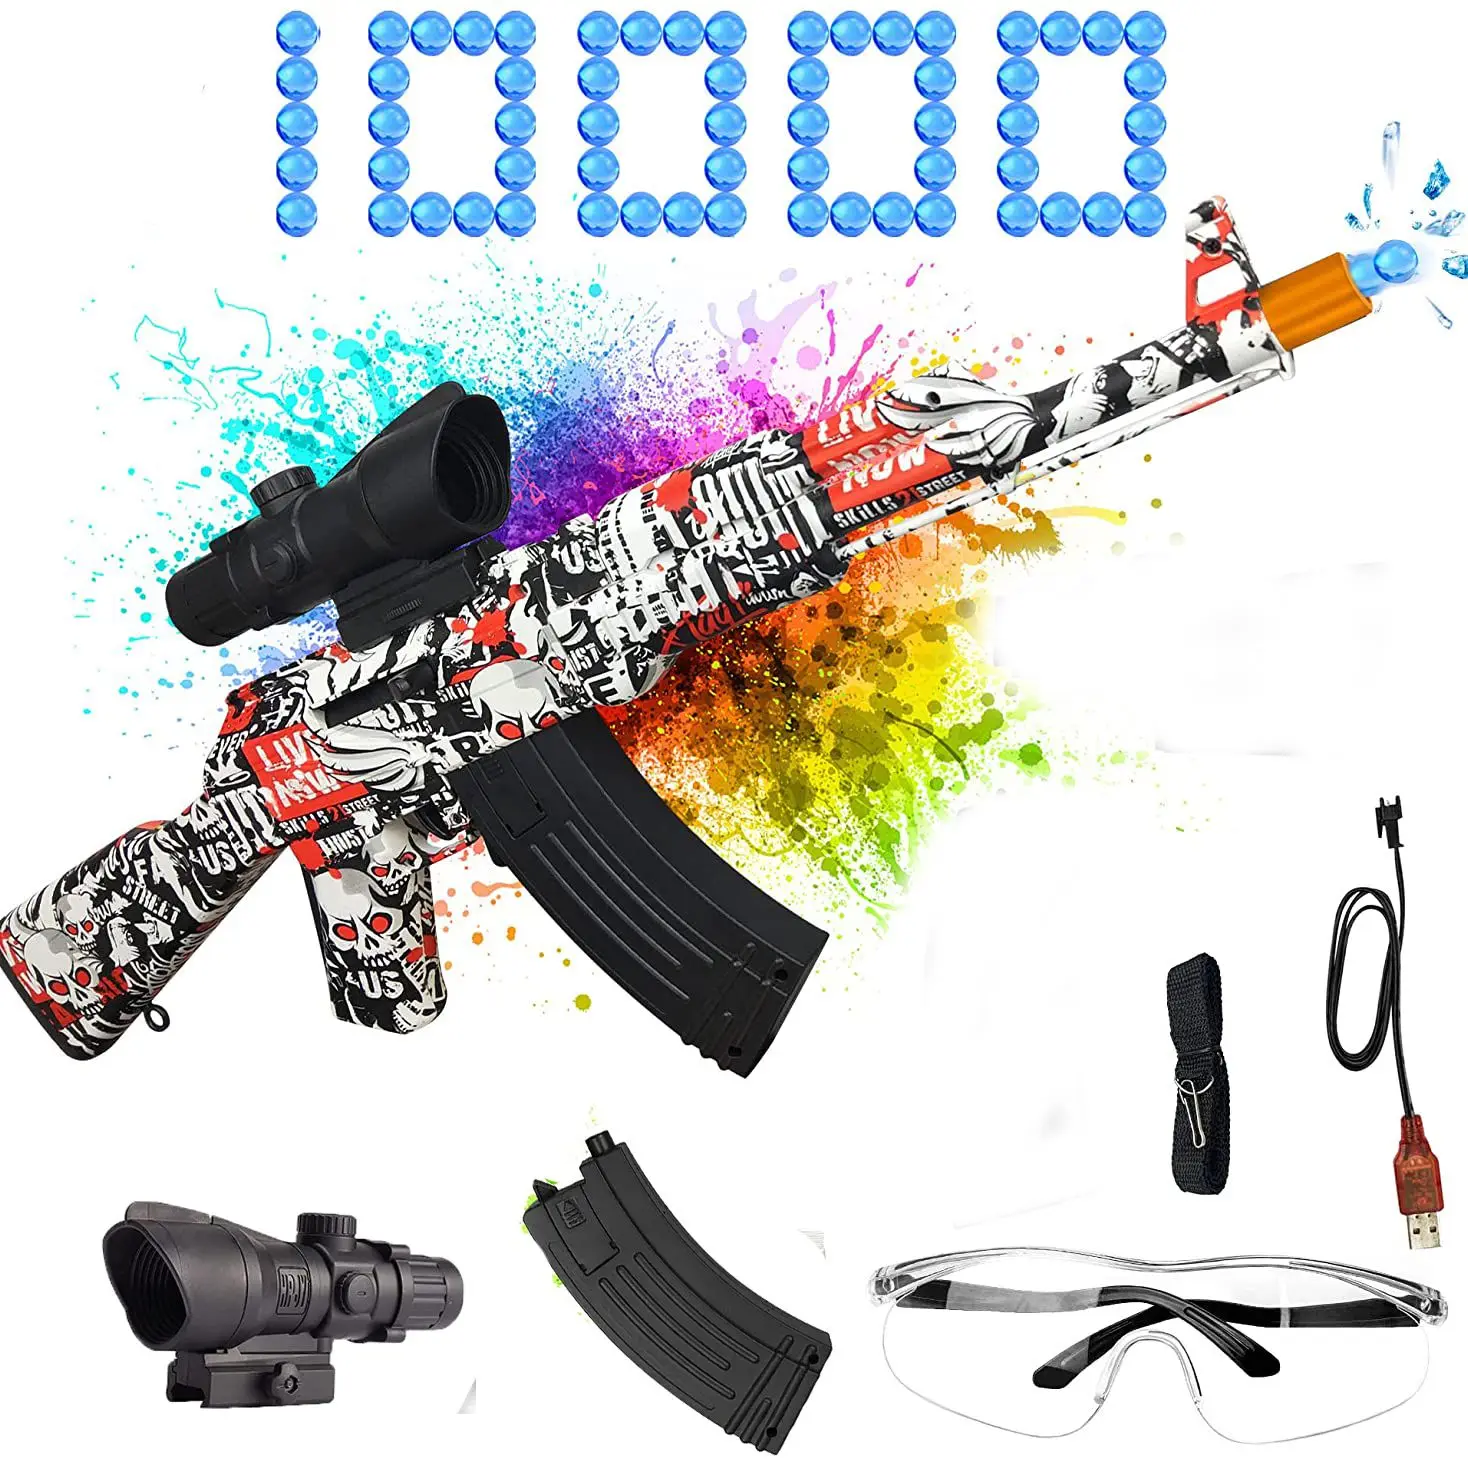 

AK47 M249 Electric Gel Blaster Rifle Gun CS Outdoor Game Toy 10000 Water Paintball Splatter Ball Shooter for Children Gift